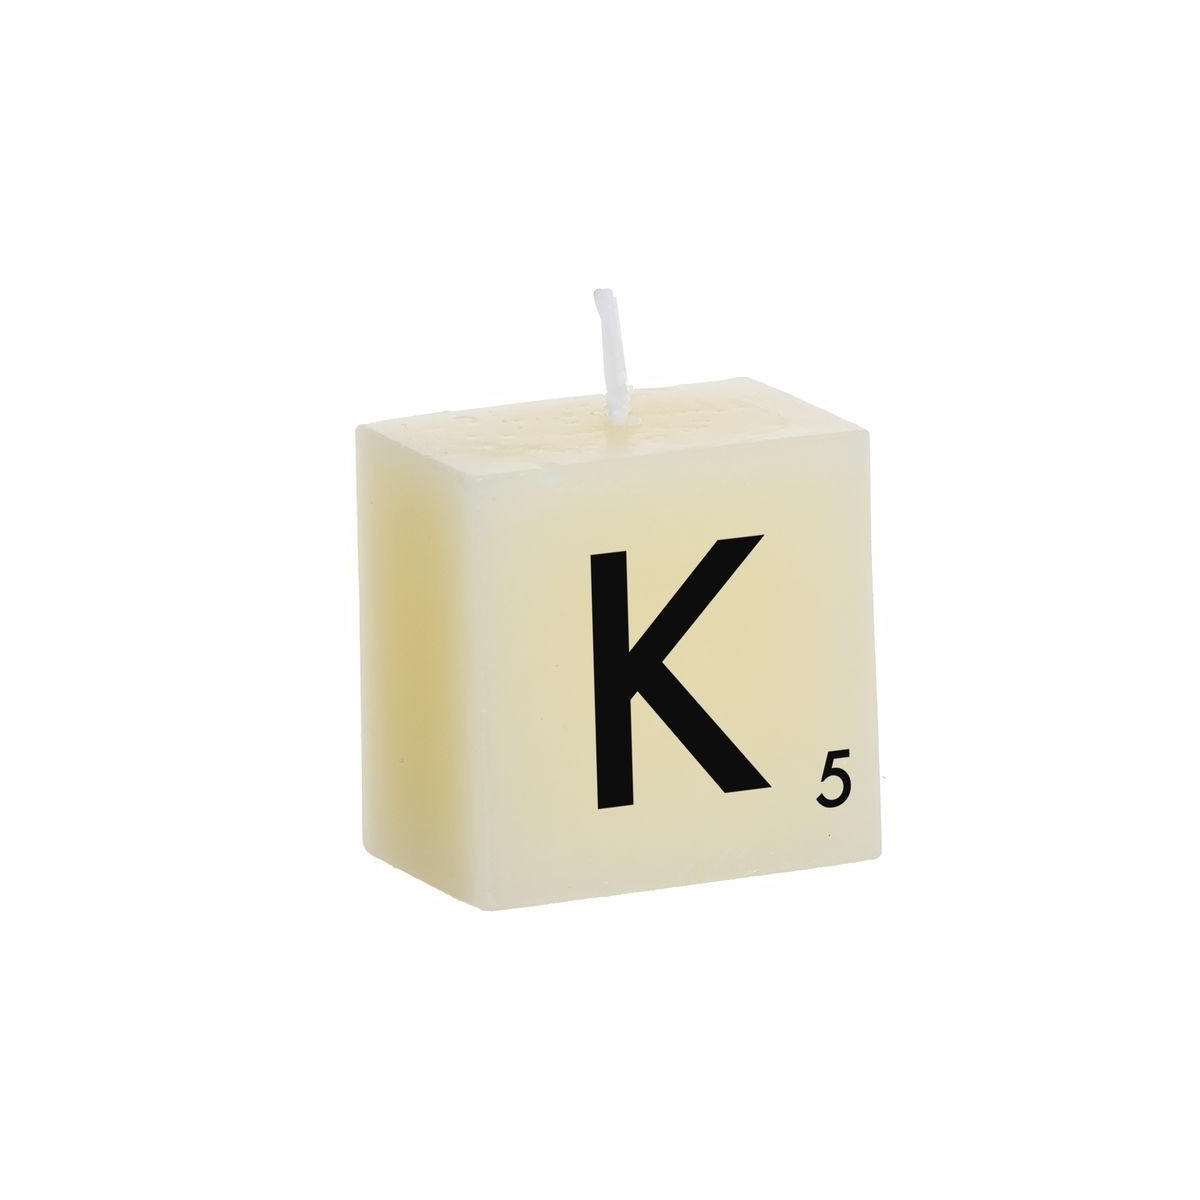 Lettera di candela k